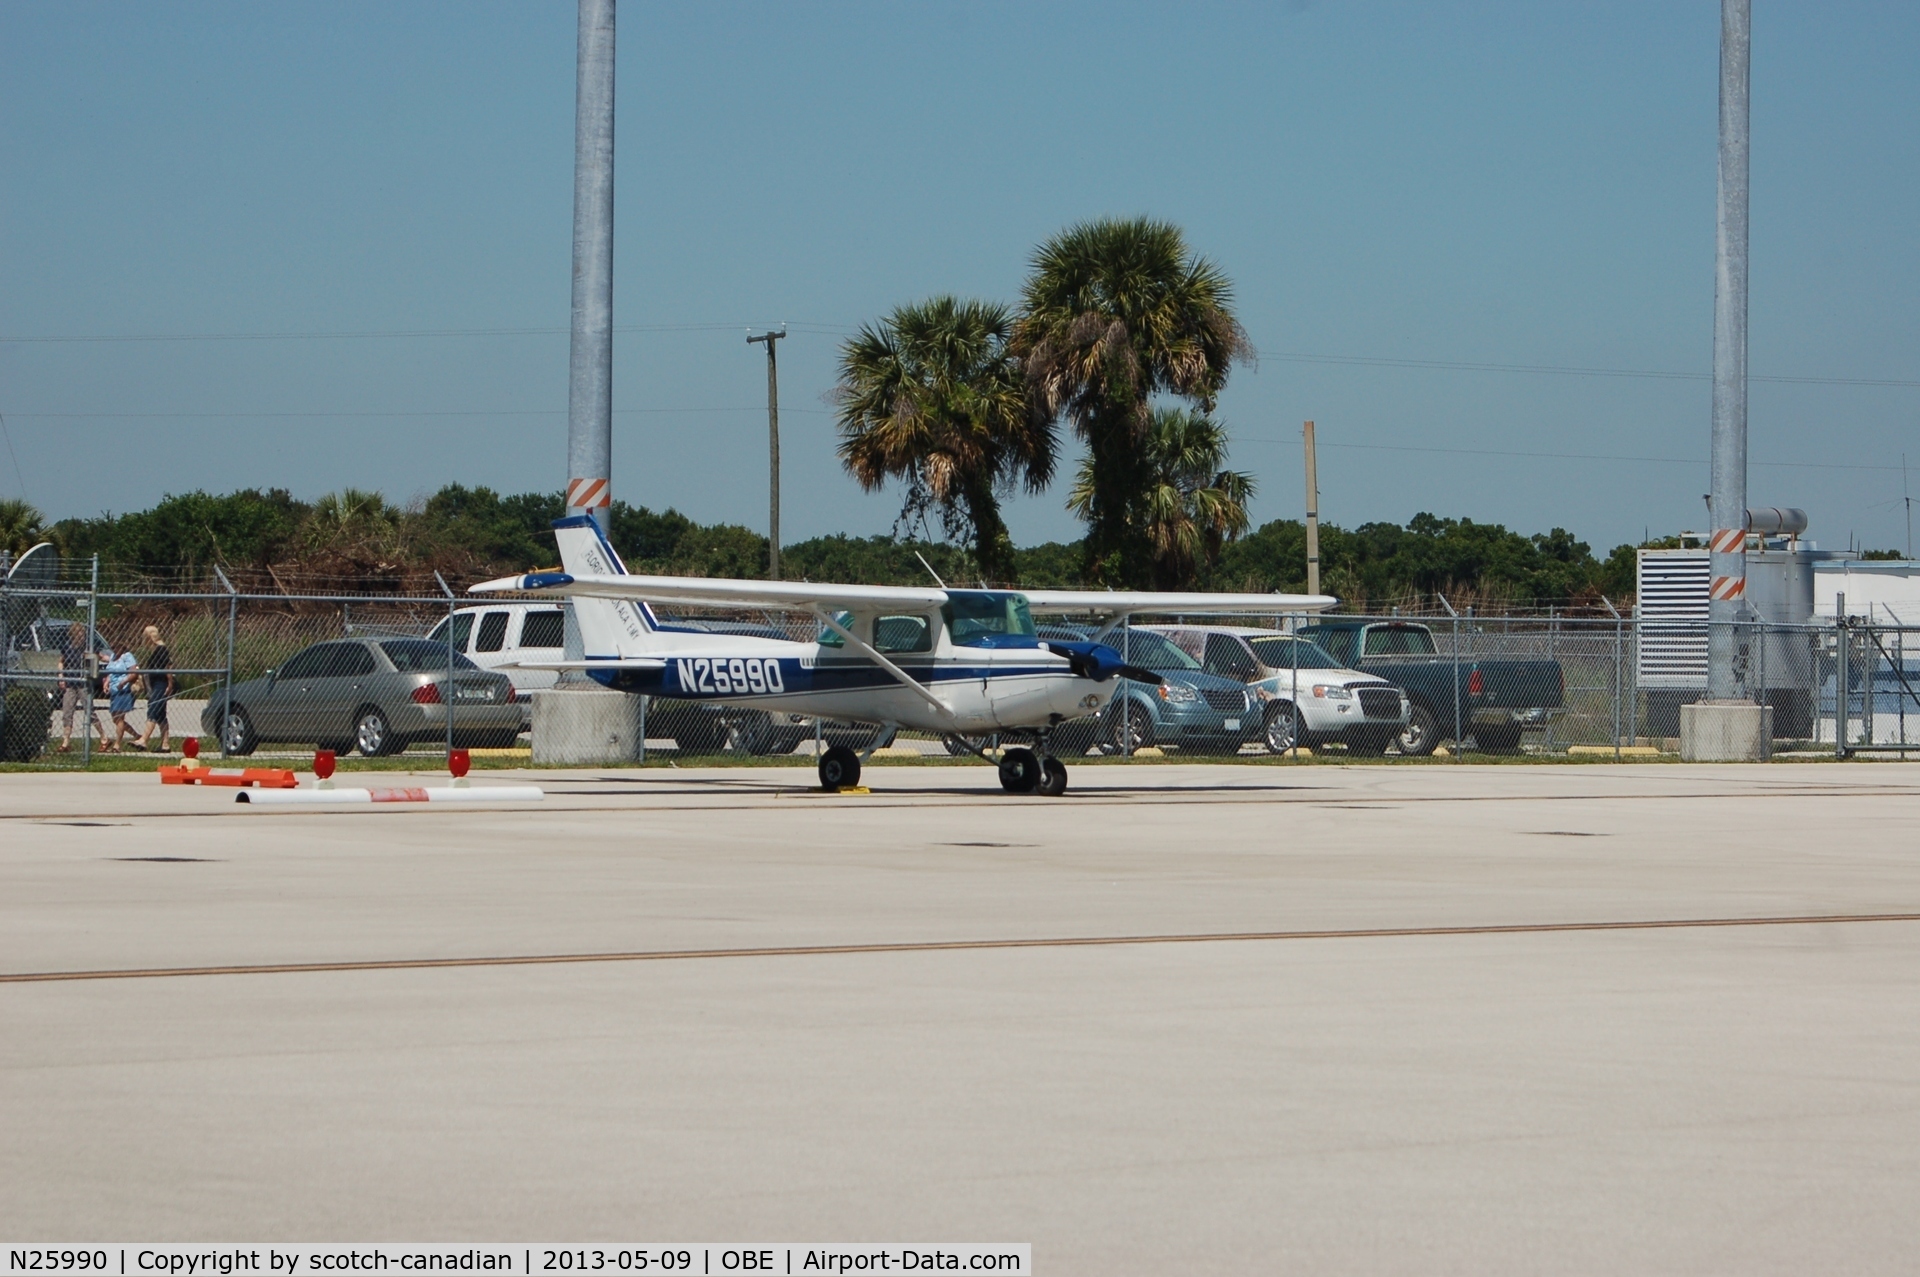 N25990, 1977 Cessna 152 C/N 15280900, 1977 Cessna 152, N25990, at Okeechobee County Airport, Okeechobee, FL